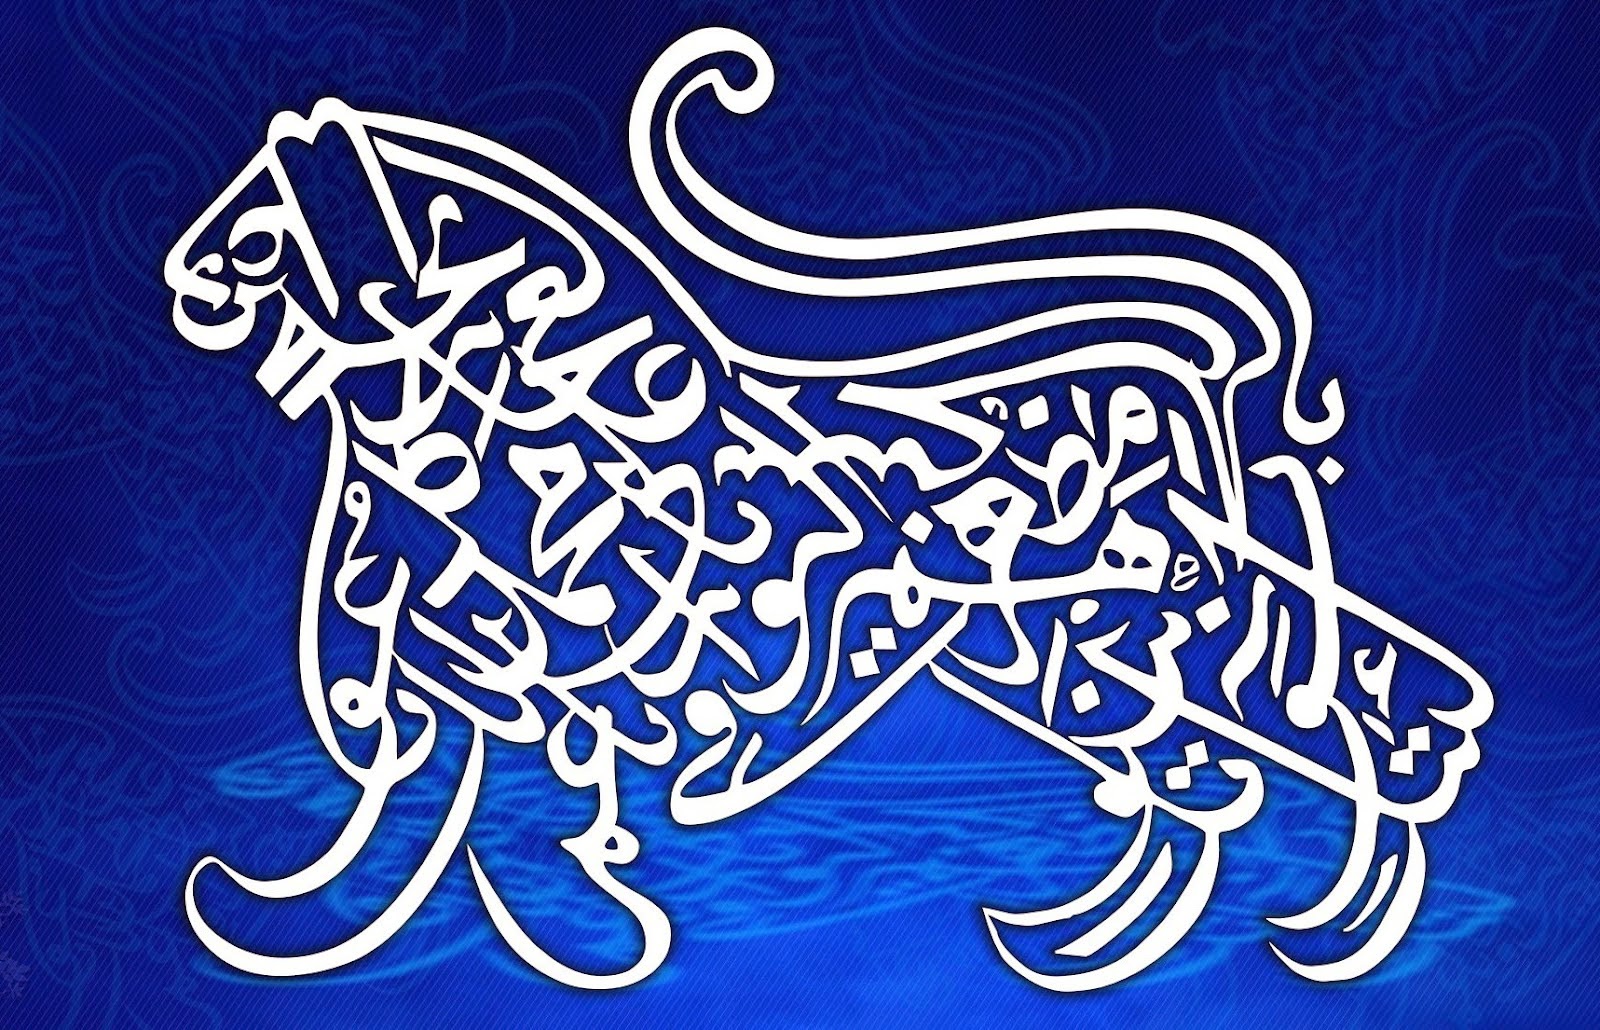 Kaligrafi Assalamualaikum Warahmatullahi - Art And Calligraphy In The Golden Age - HD Wallpaper 